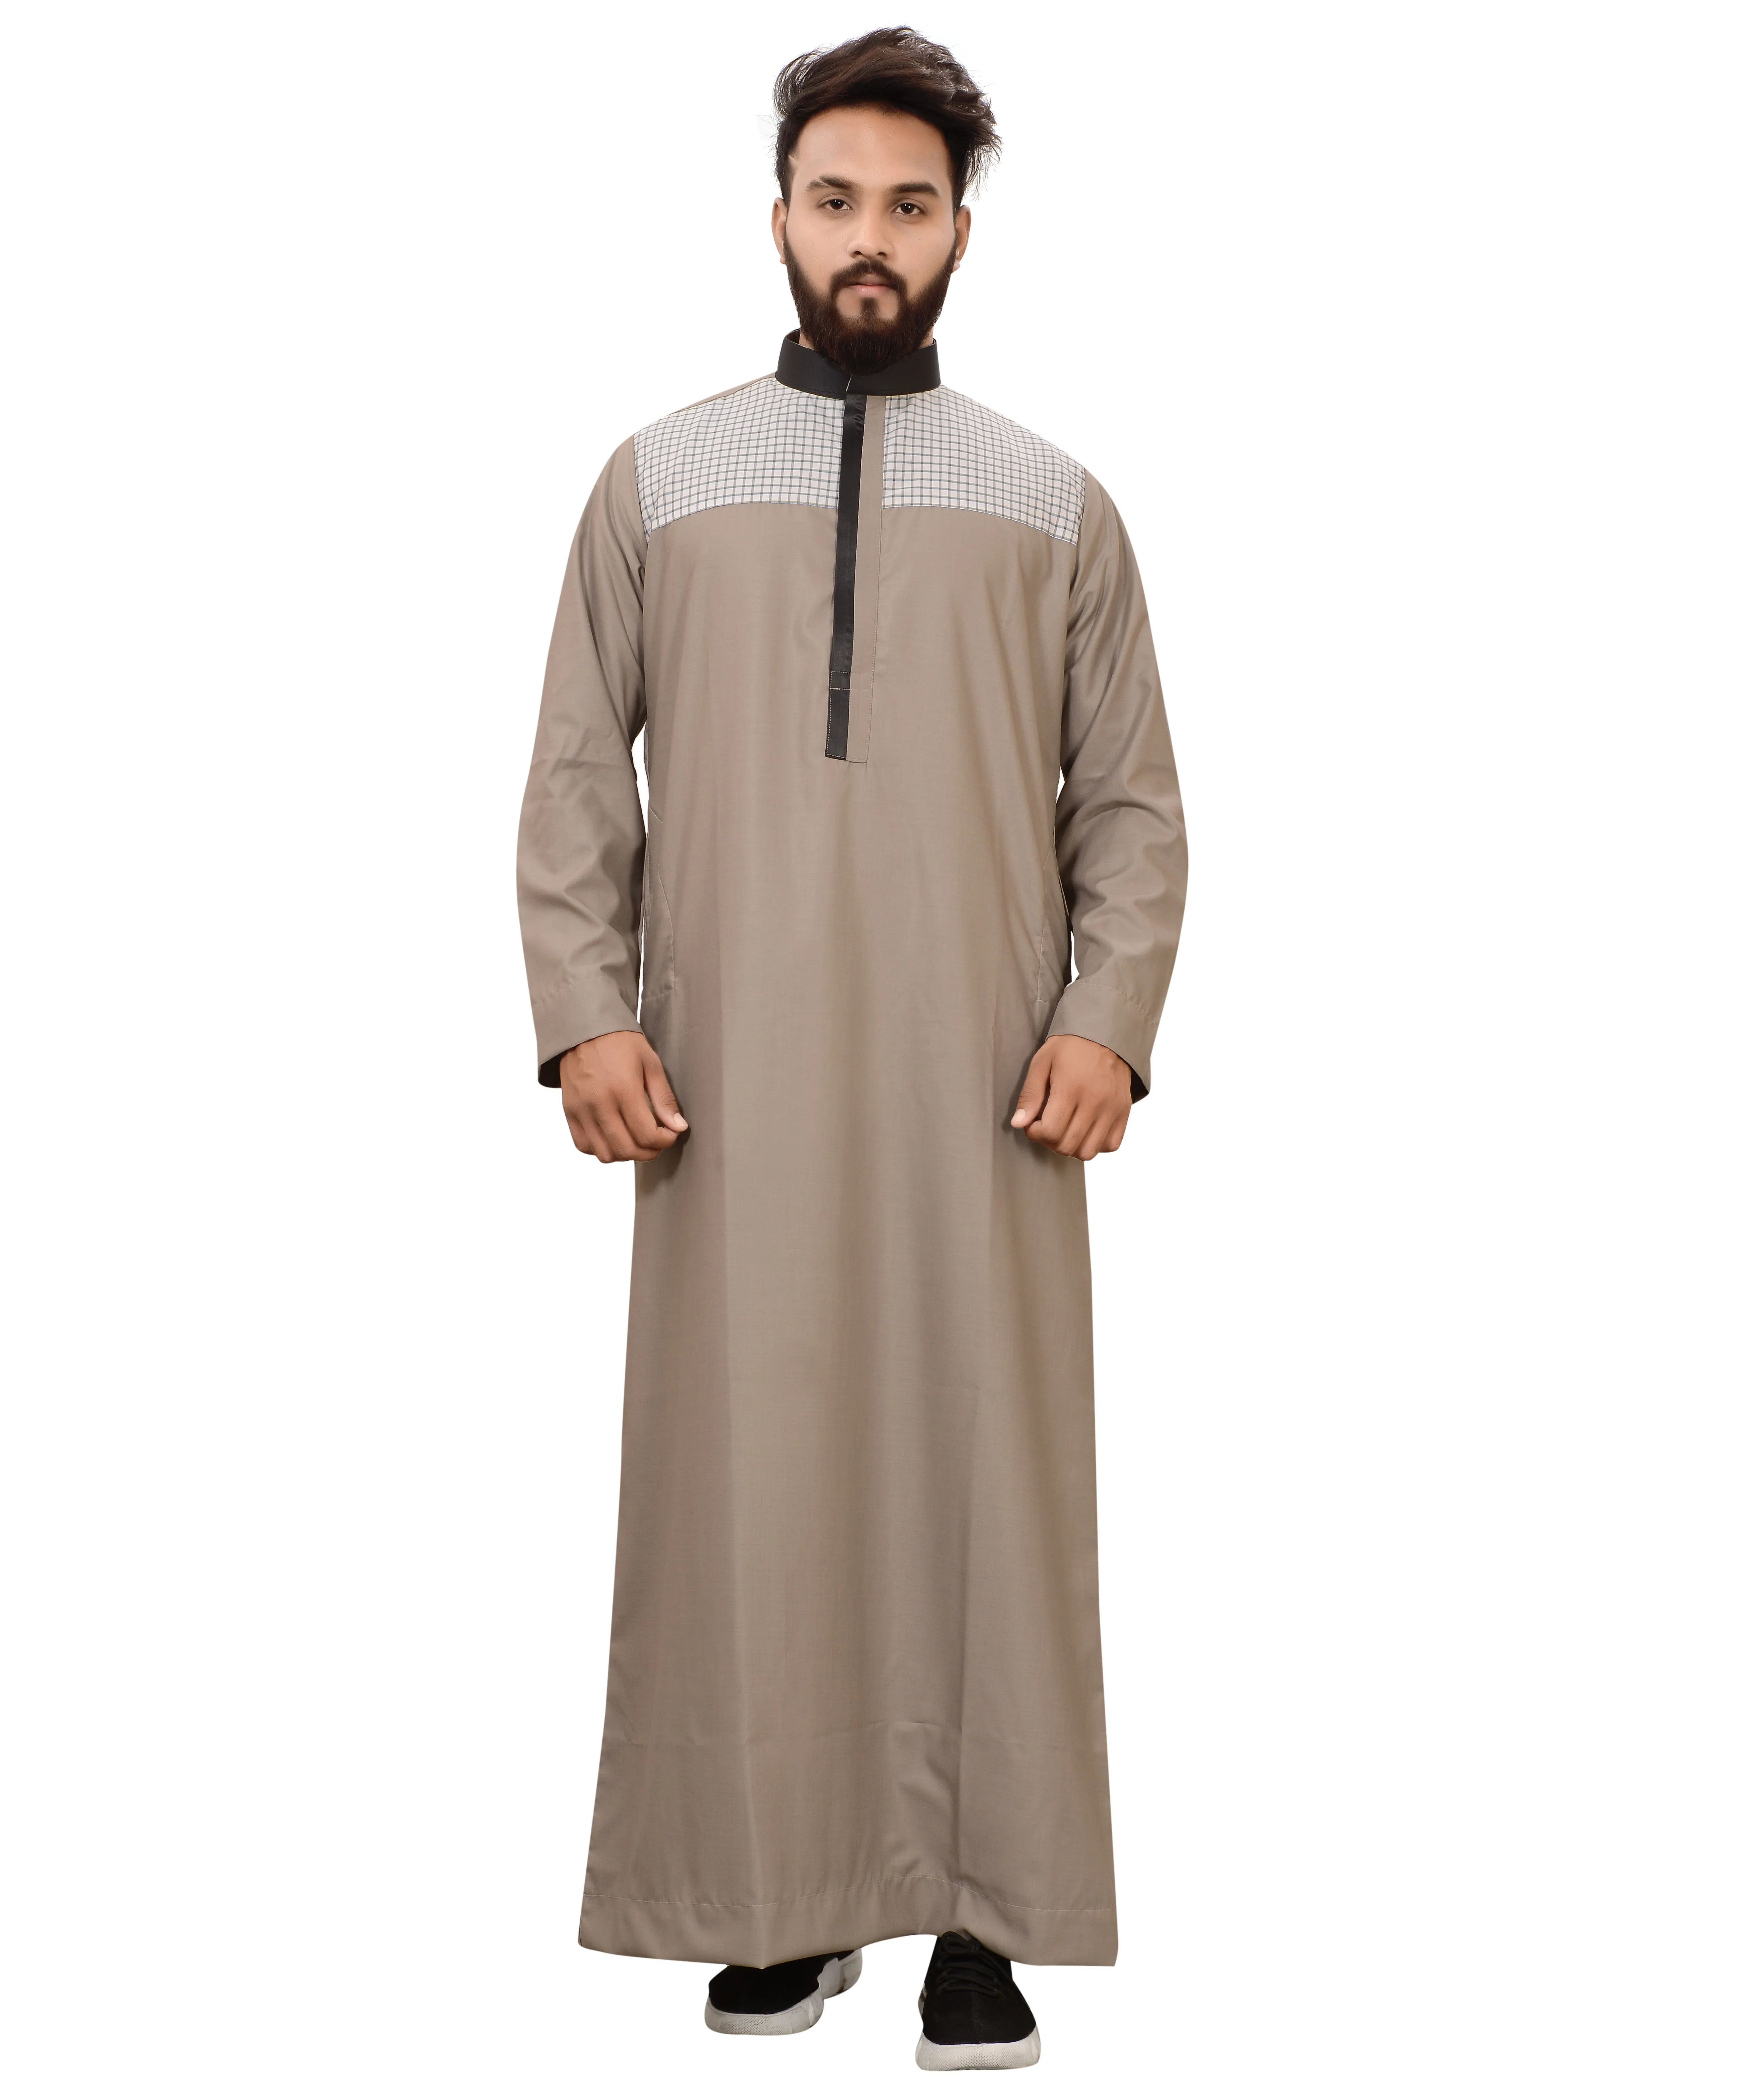 Robe Thobe pour hommes, couleur rose, style islamique, musulman, arabe, Kaftan, Abaya